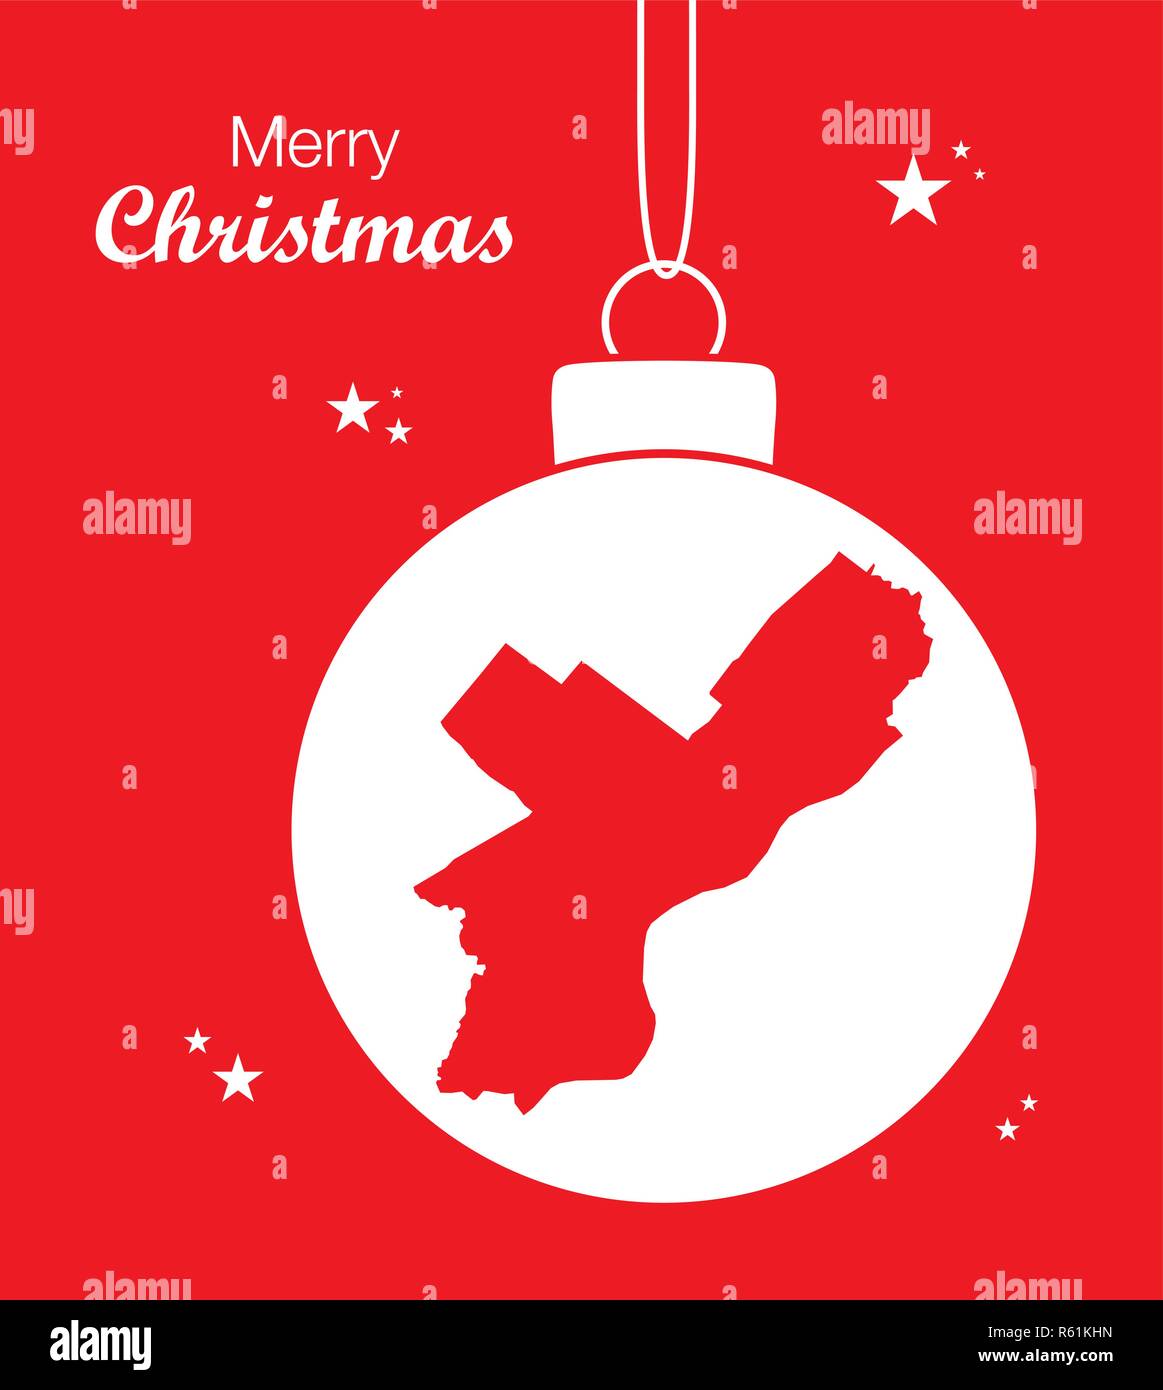 Merry Christmas illustration theme with map of Philadelphia Stock Vector